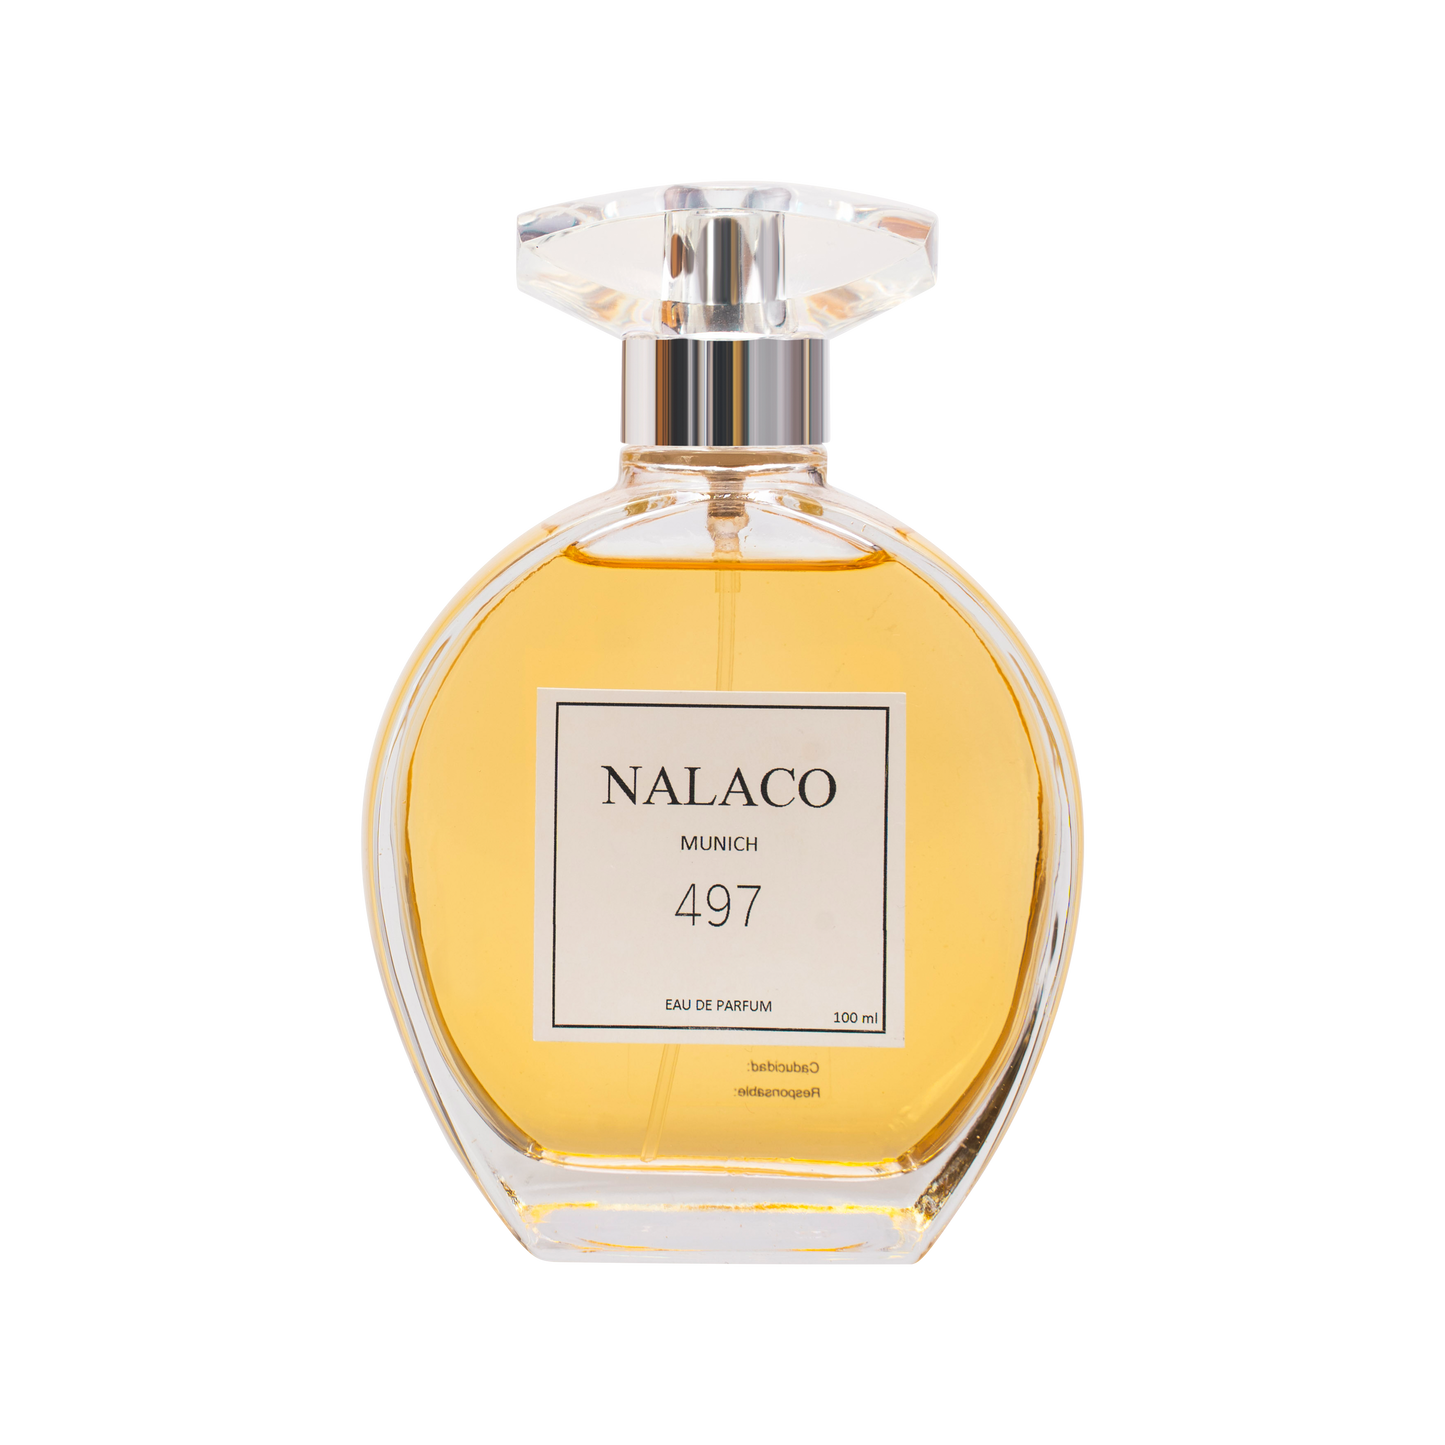 Nalaco No. 497 inspired by Giorgio Armani Because it´s you